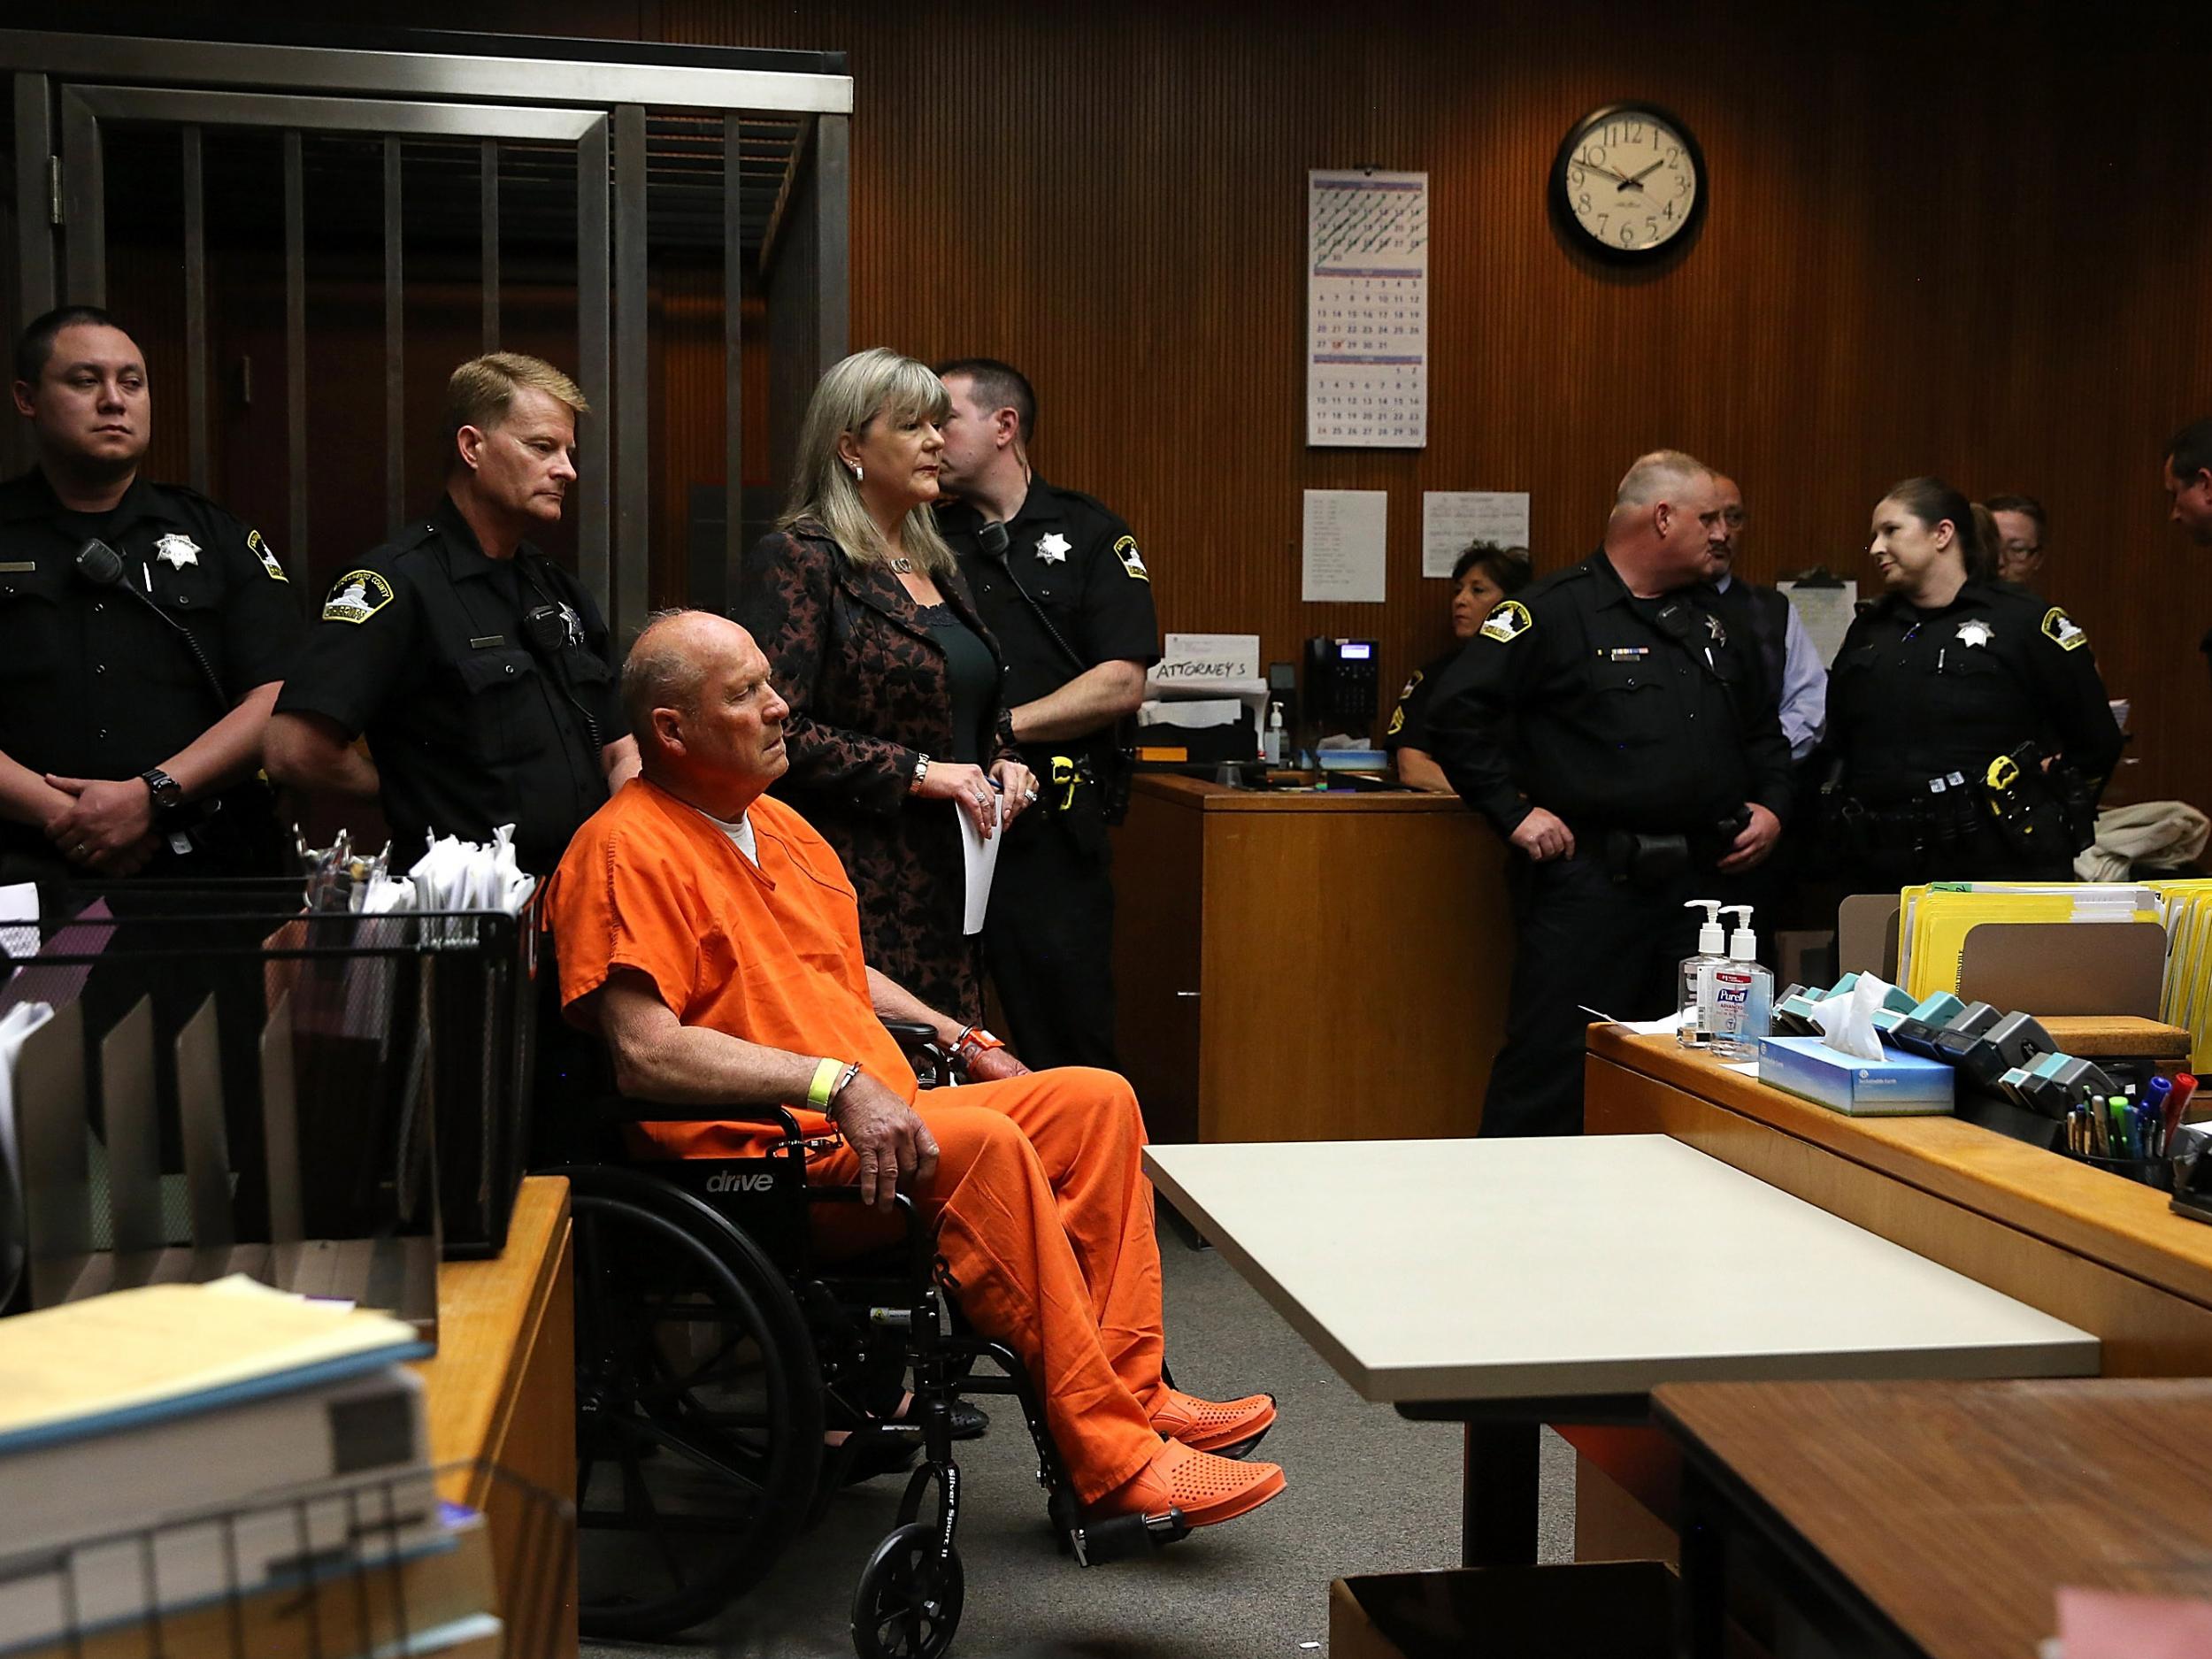 Joseph James DeAngelo, the suspected 'Golden State Killer', appears in court on April 27, 2018